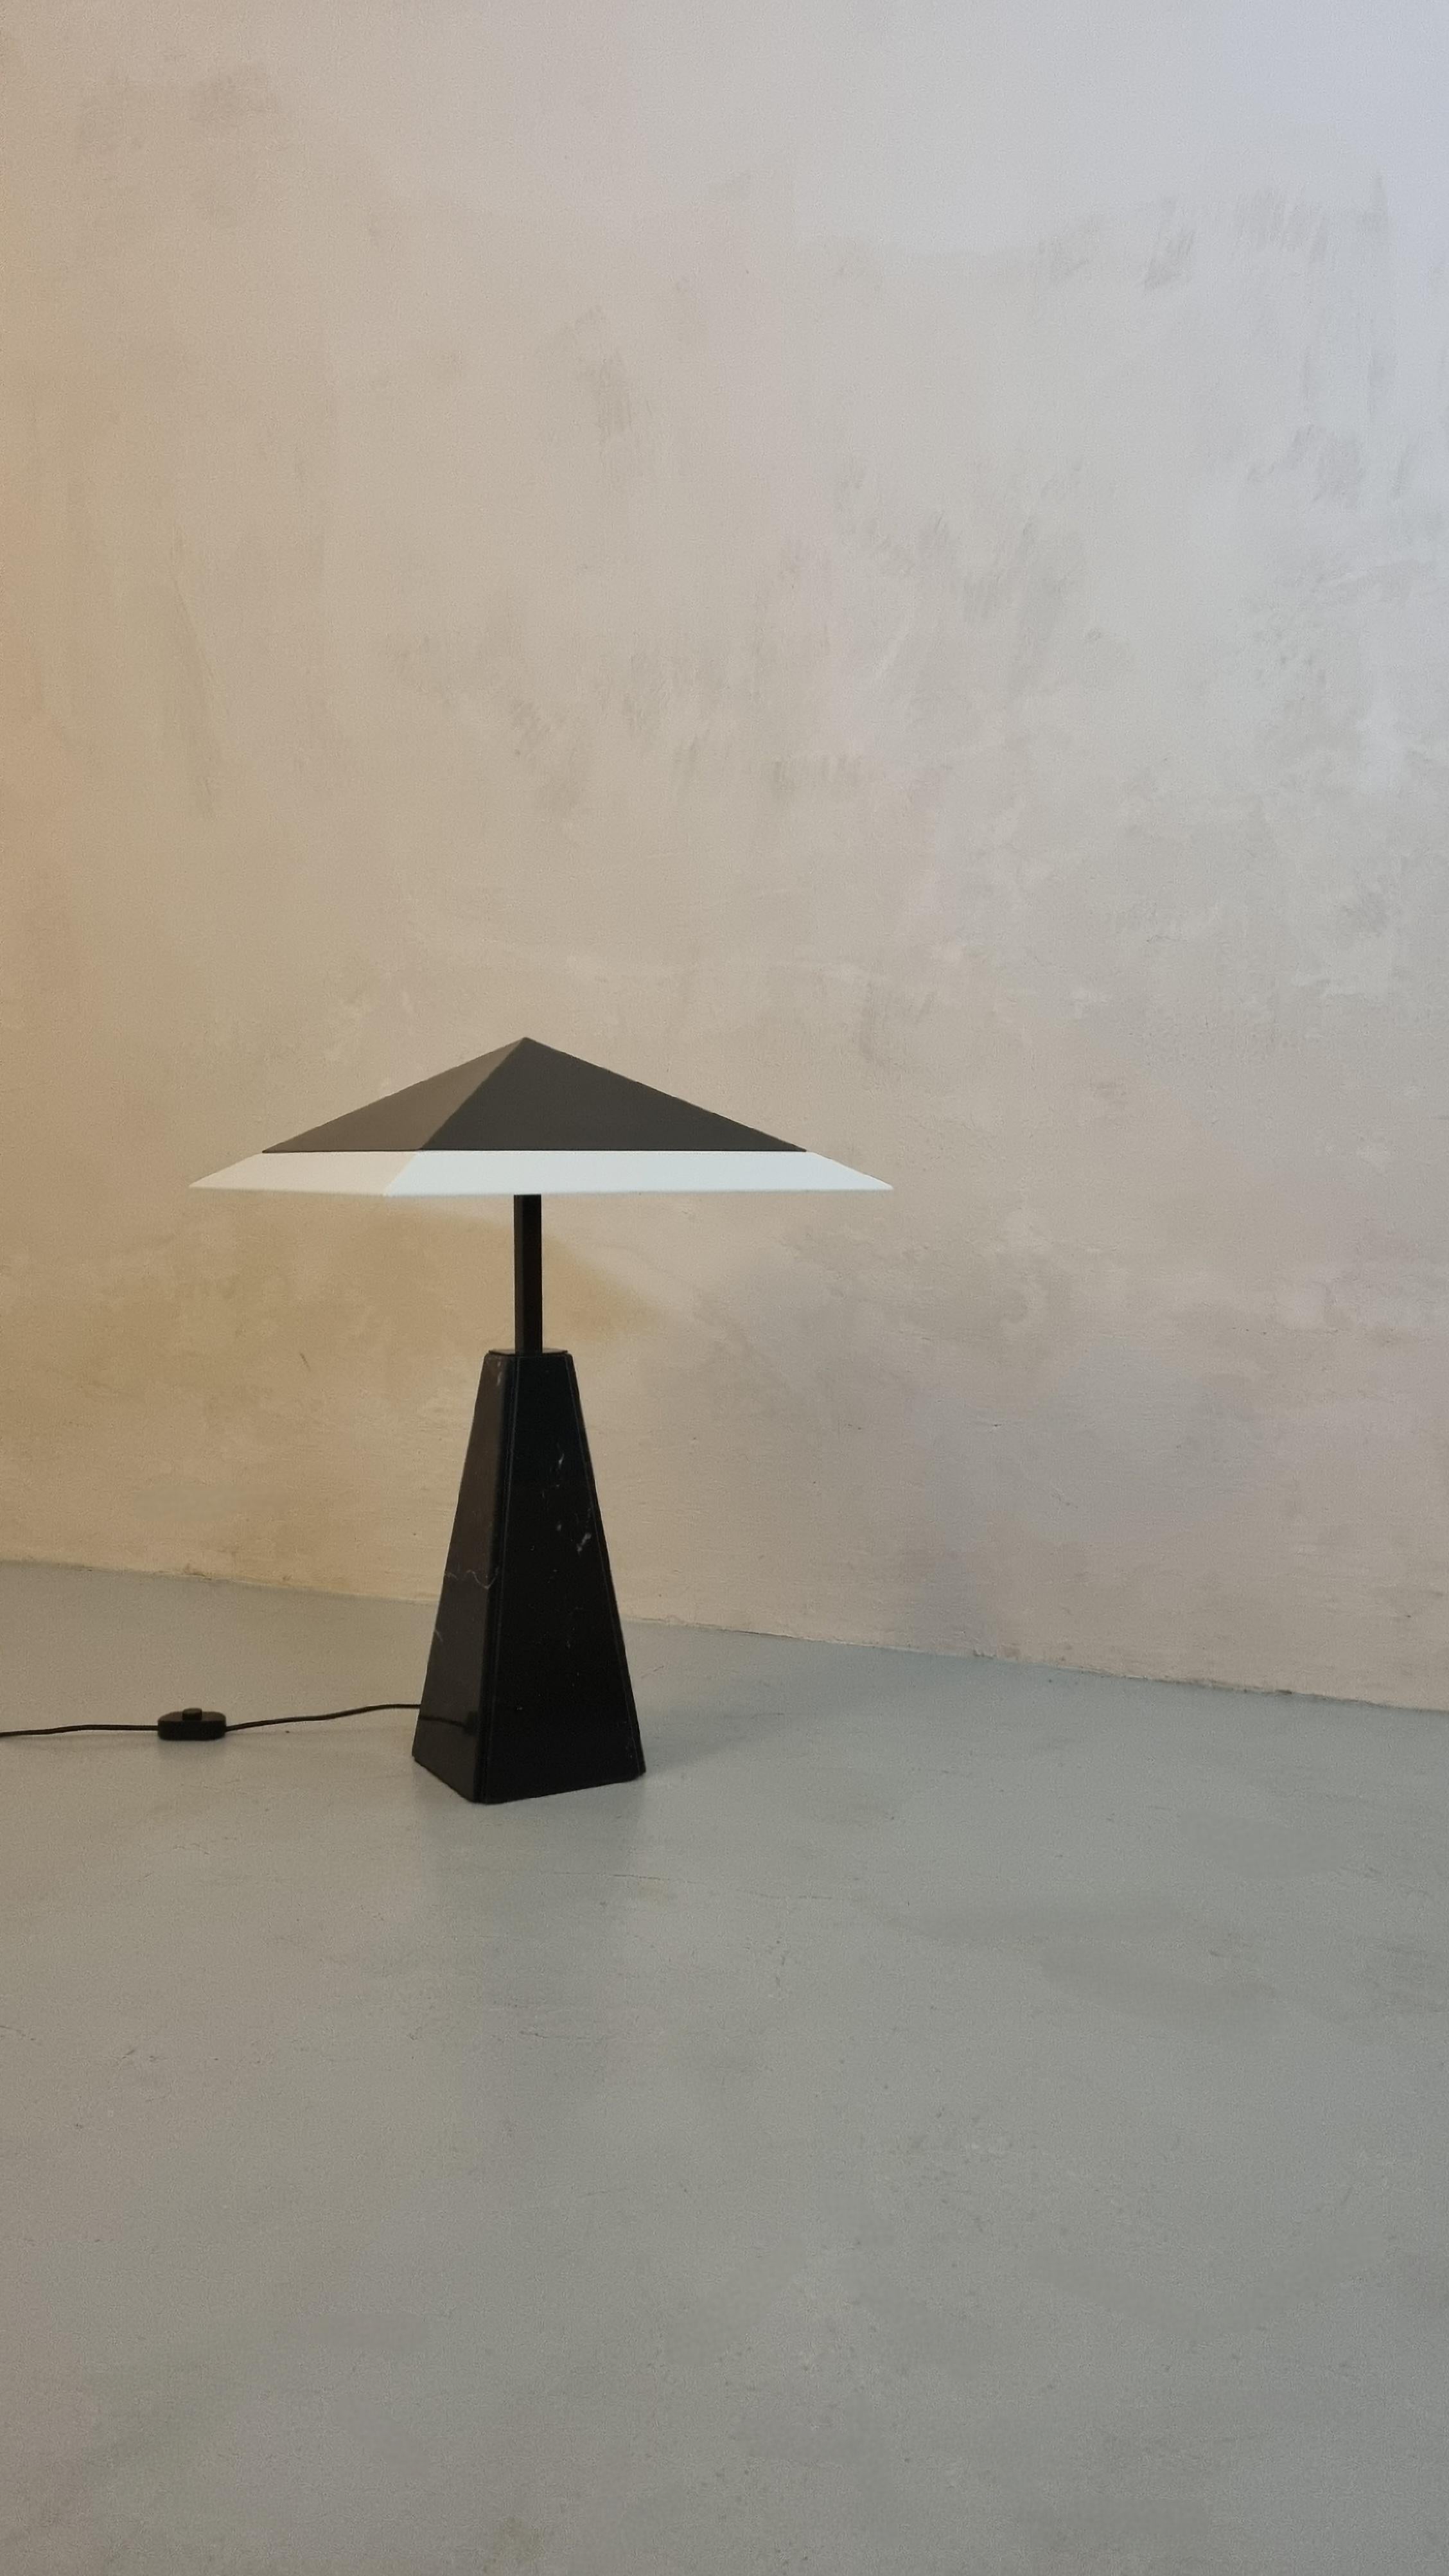 Tischlampe des Modells Abat Jour, entwickelt von Cini Boeri 1970 für Arteluce, erste Produktion.
Sockel in marmo nero marquina, Gestell in acciaio verniciato, paralume in perspex e lamiera verniciata, la lampada monta 4 lampadine.
Una rara prima